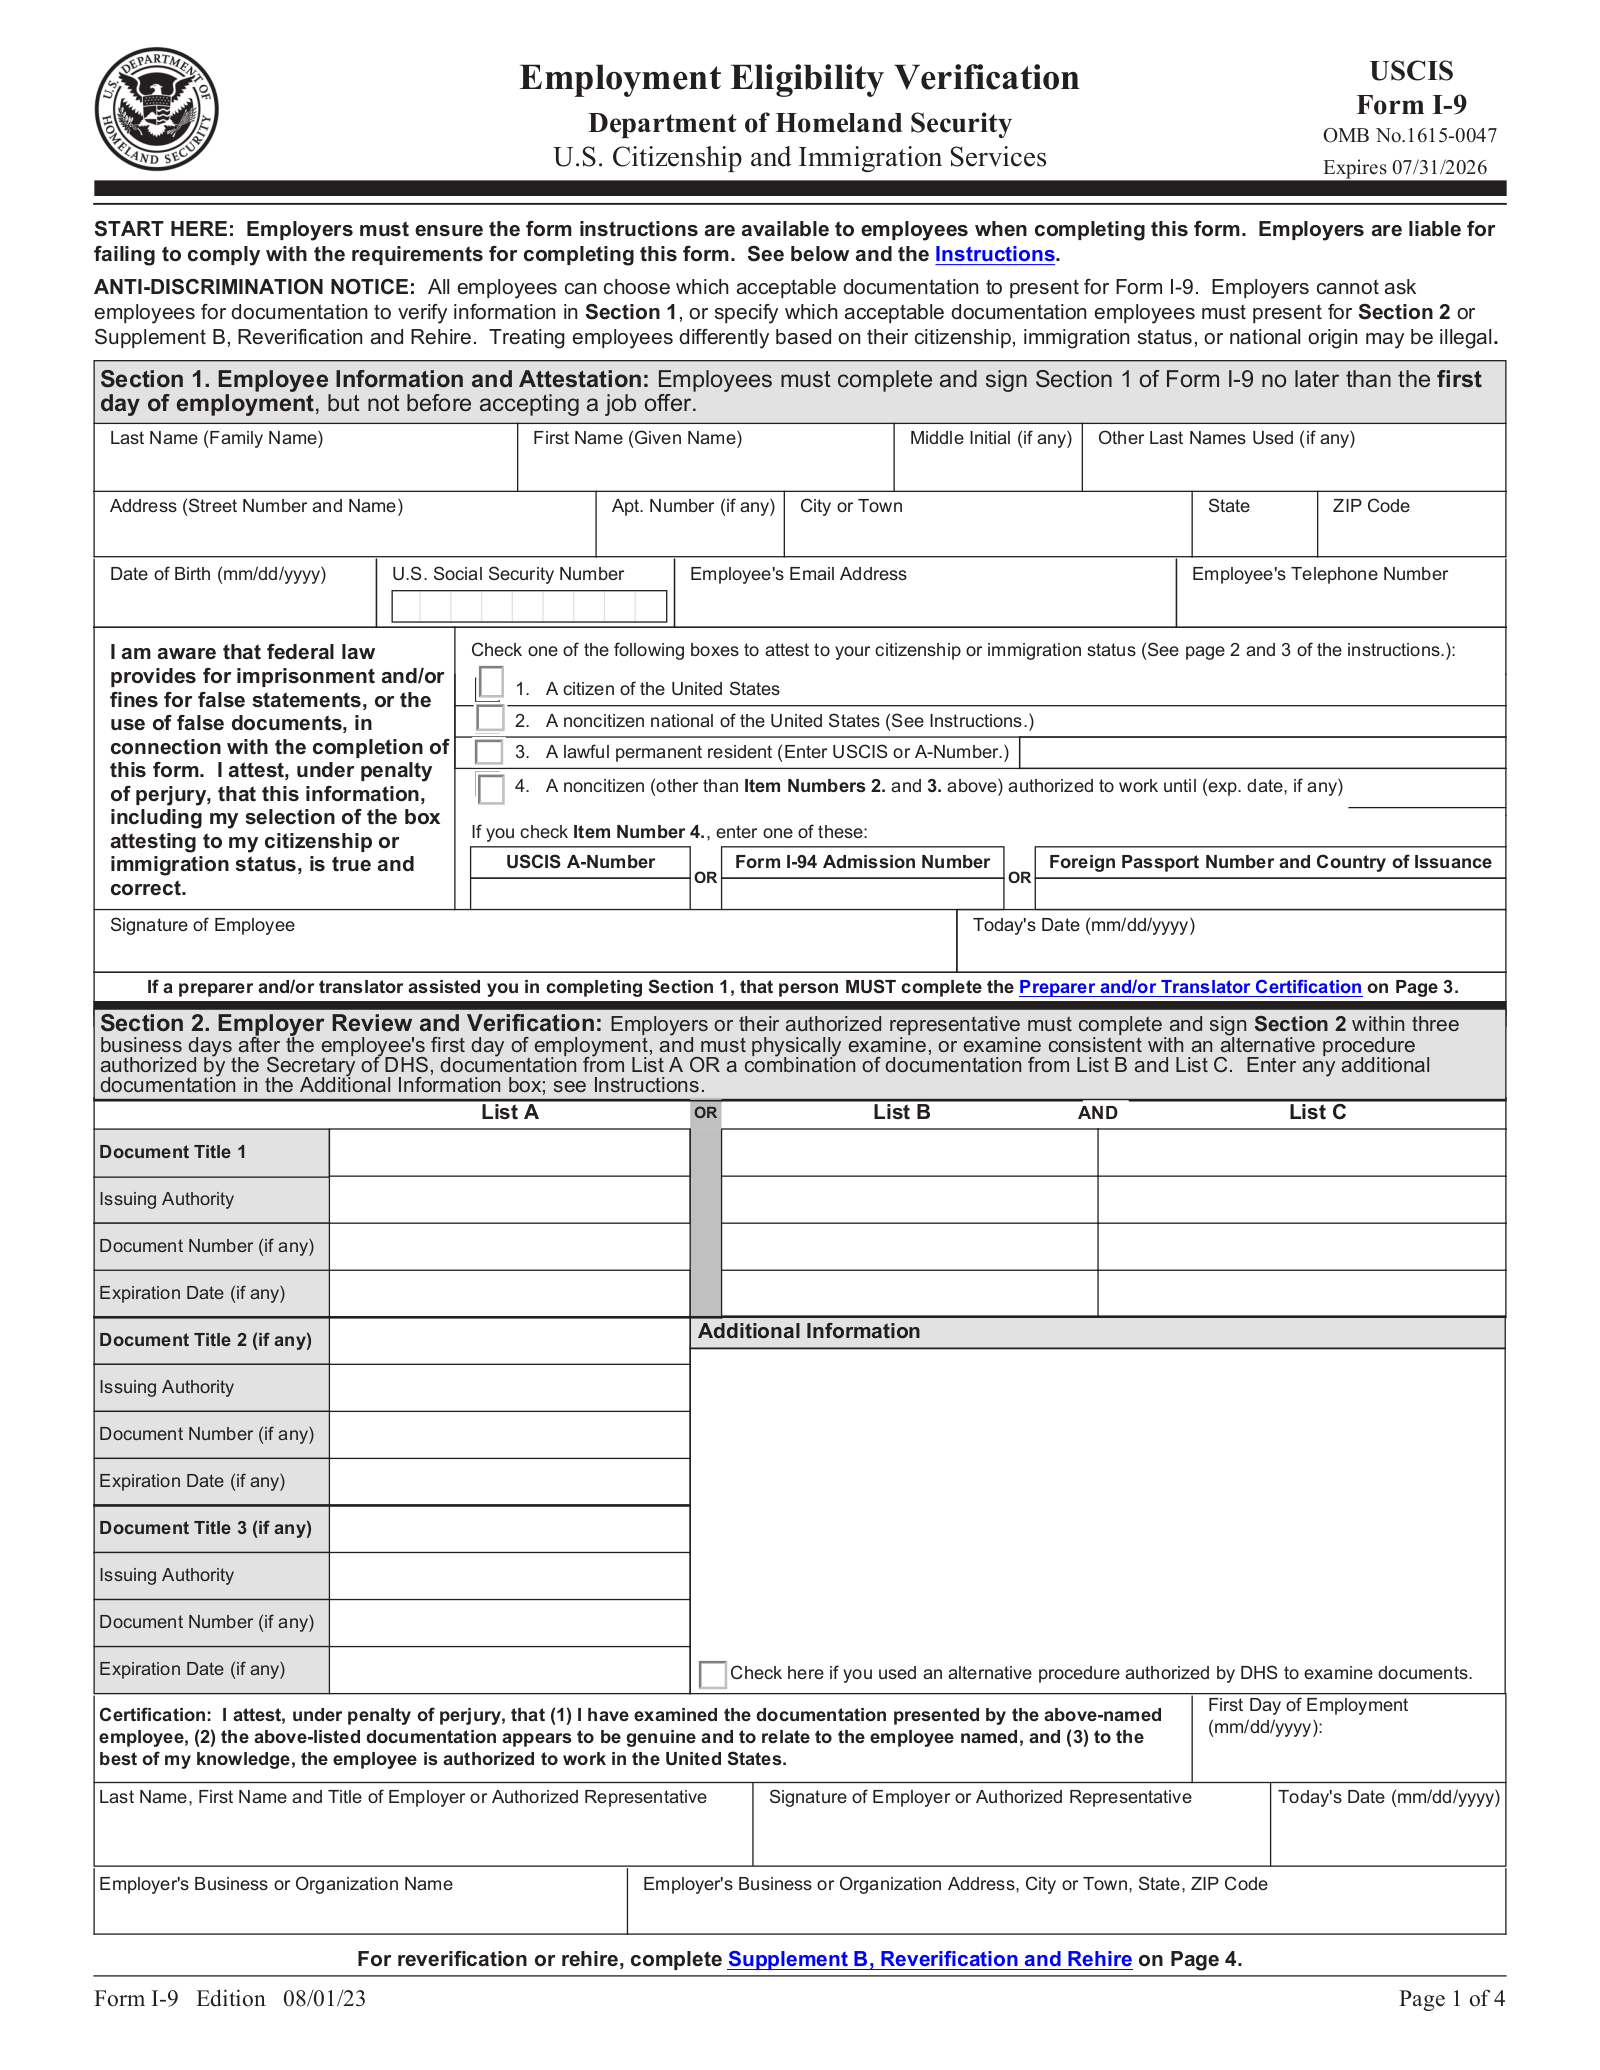 I-9 Form | Employment Eligibility Verification